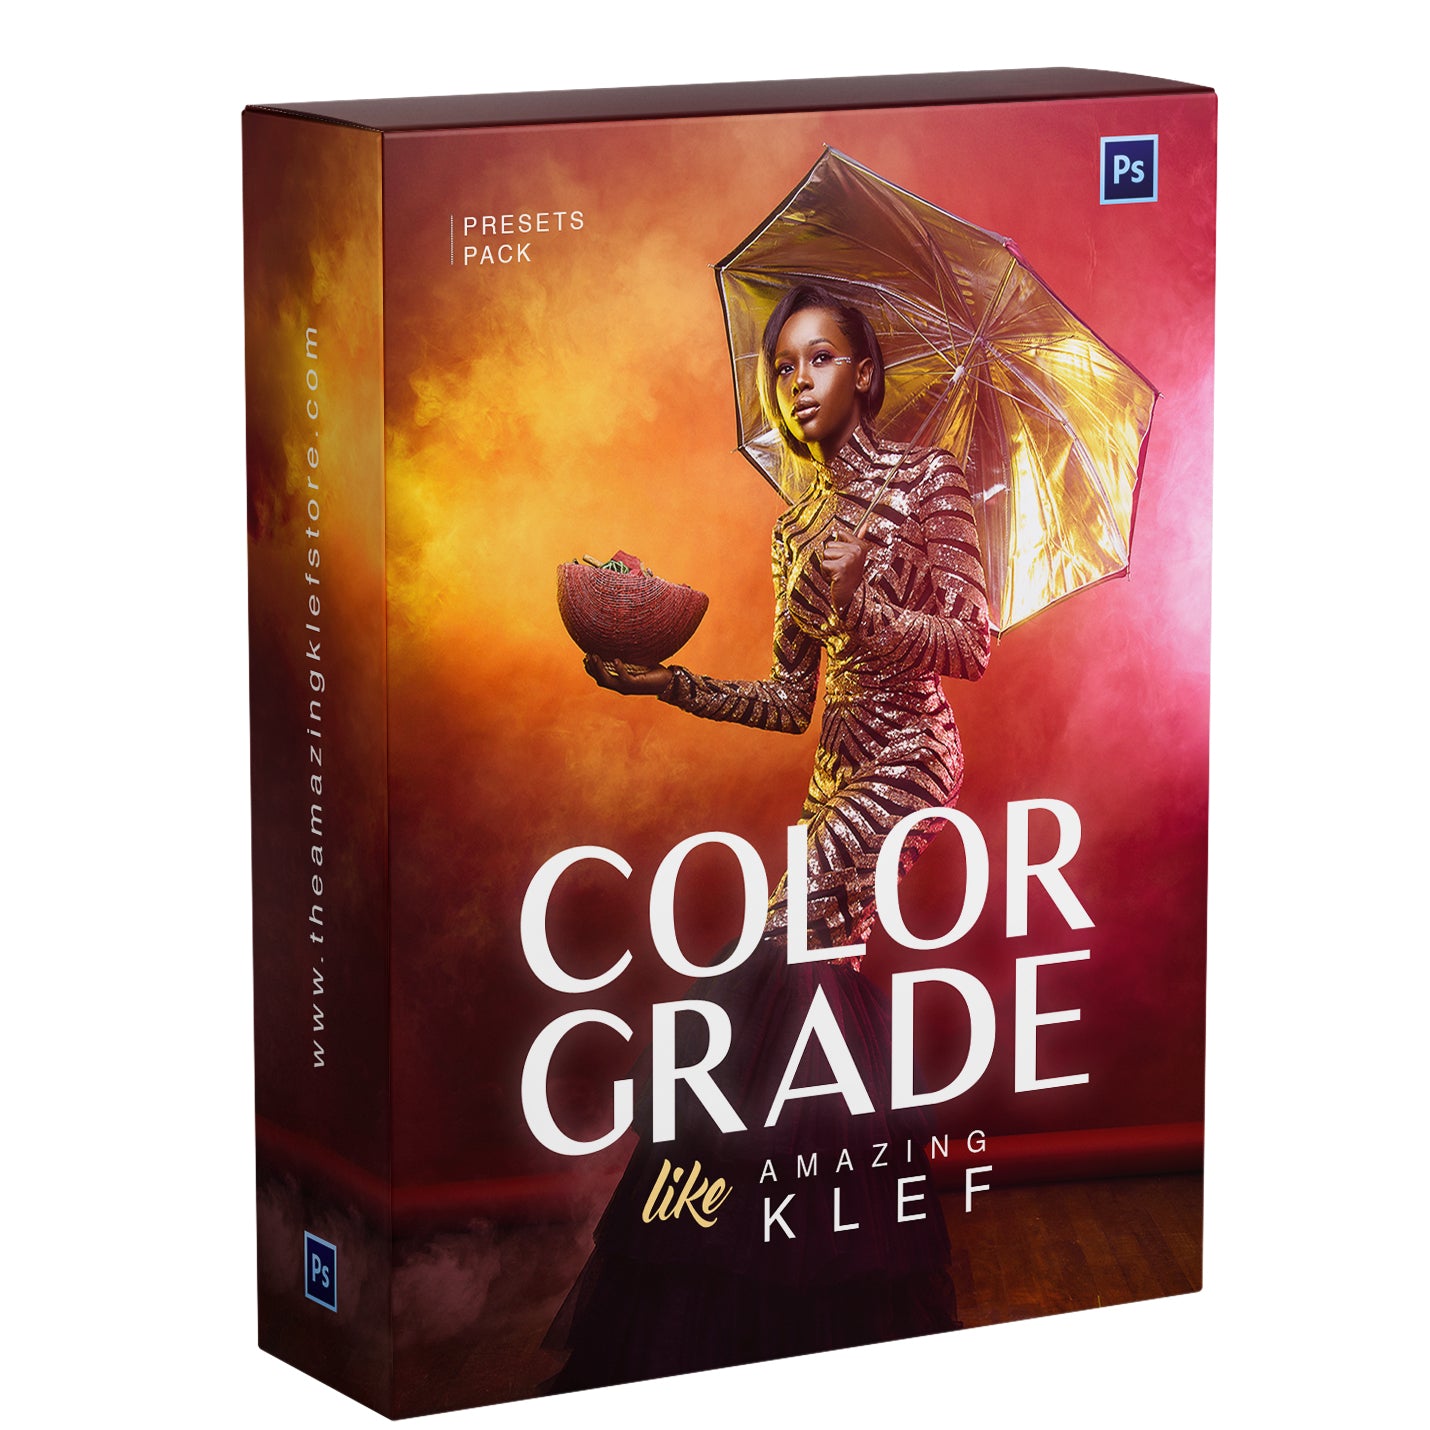 ColorGrade like Amazing Klef : Presets Pack + Plugin reveal